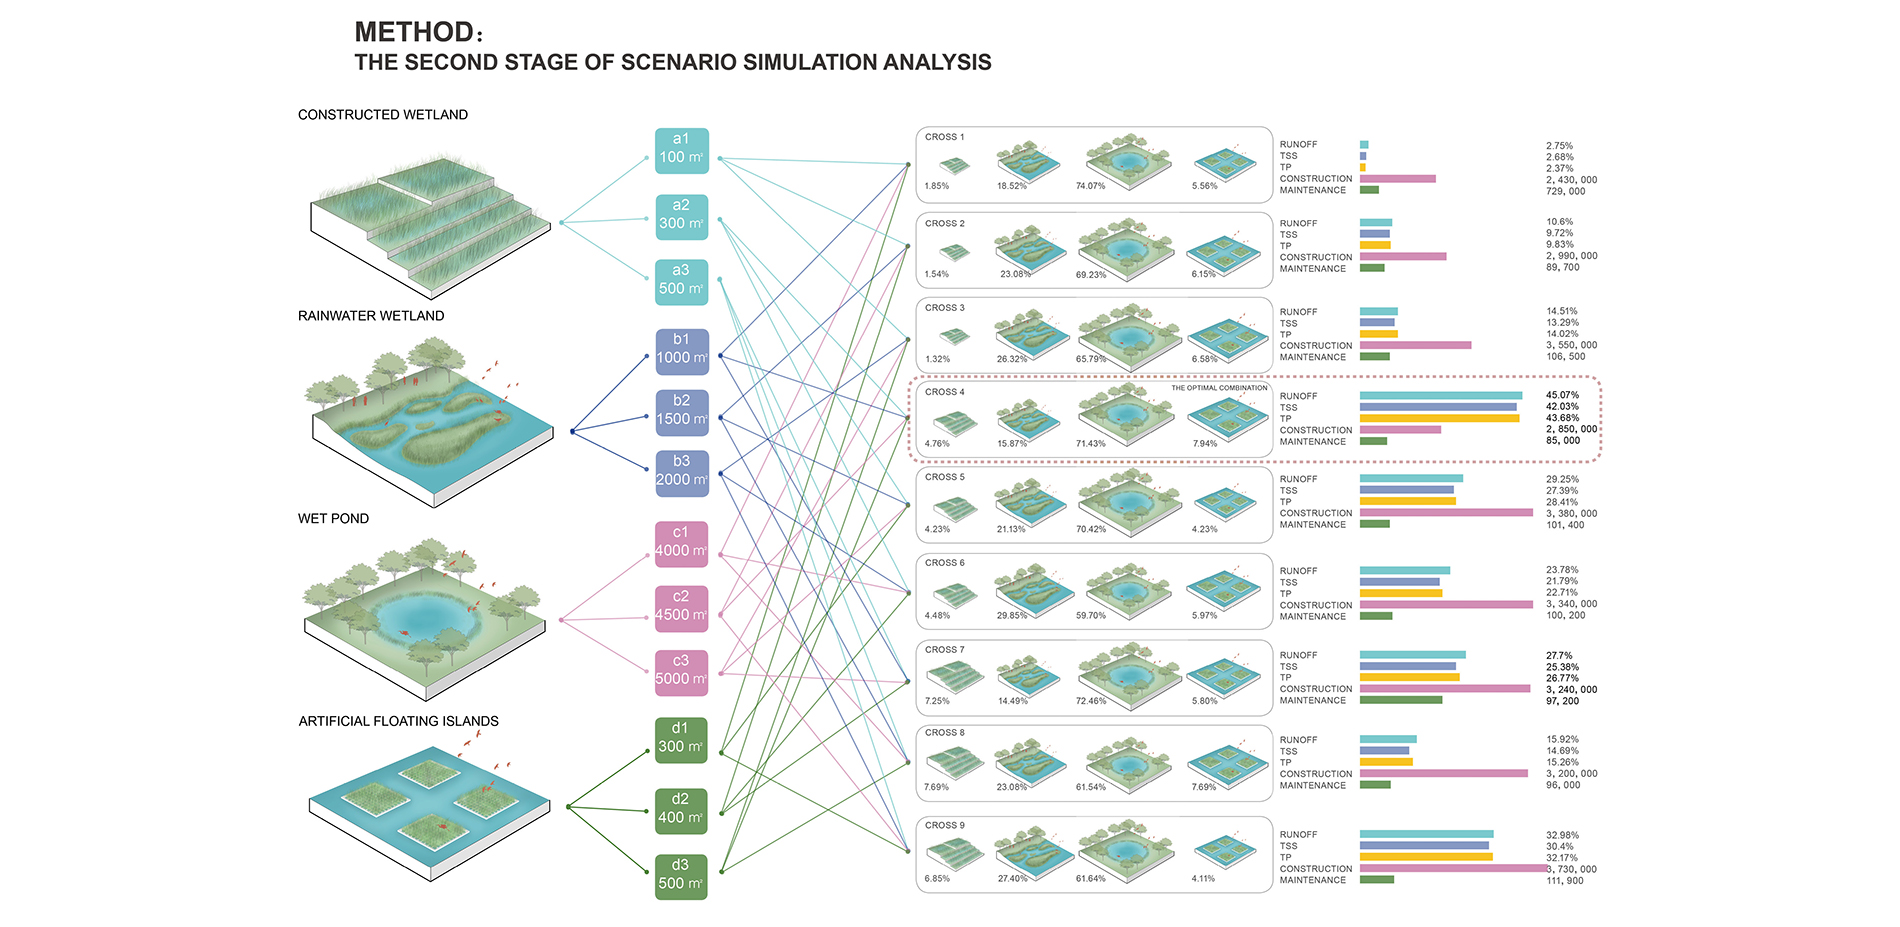 Method: The second stage of scenario simulation analysis